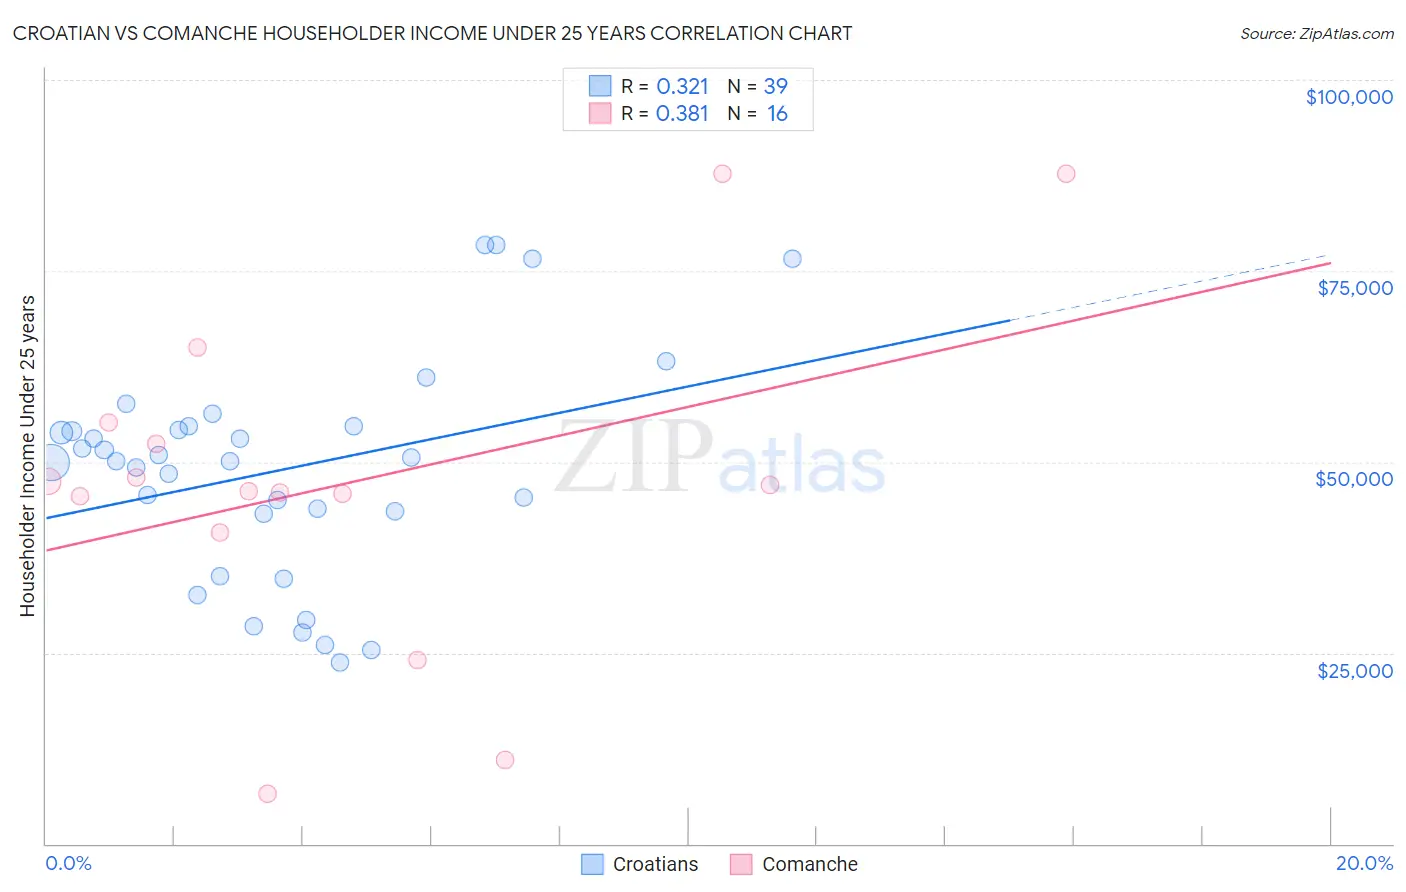 Croatian vs Comanche Householder Income Under 25 years